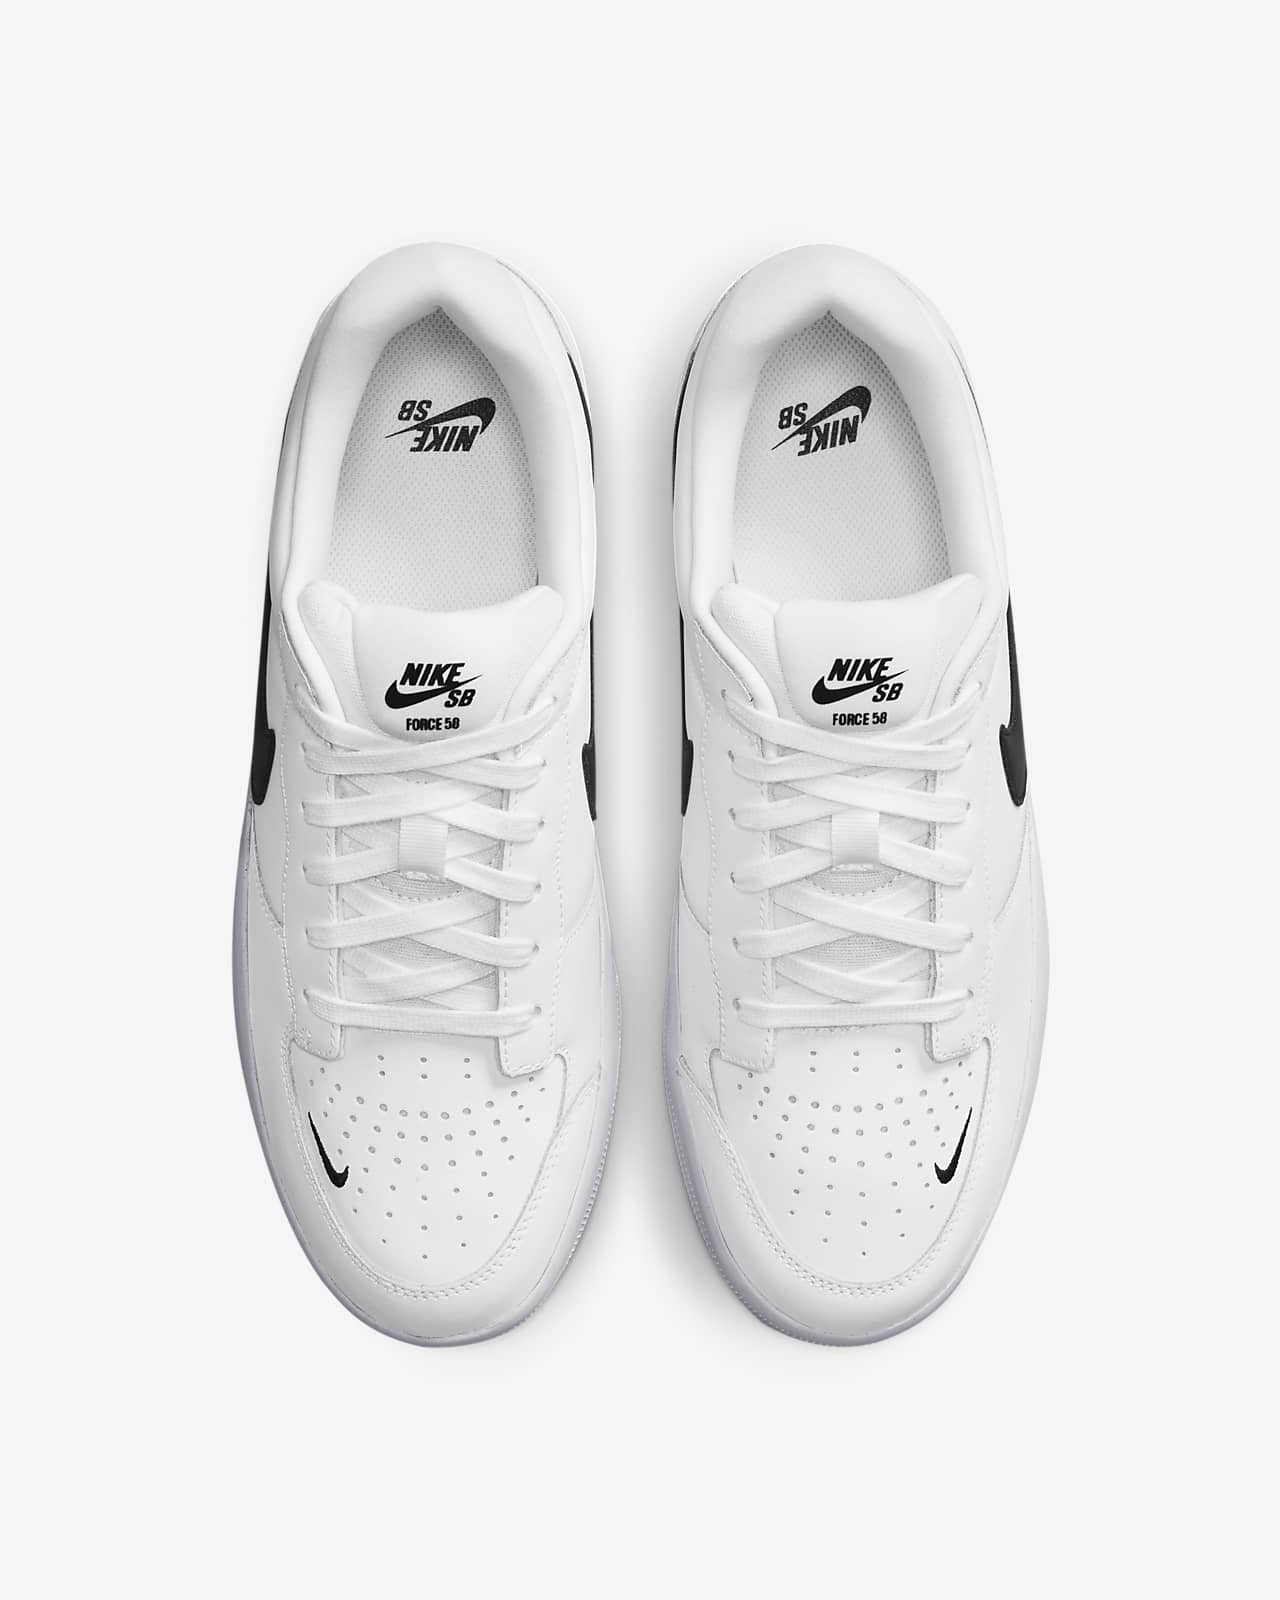 Nike SB Force 58 Premium Skate Shoes. 